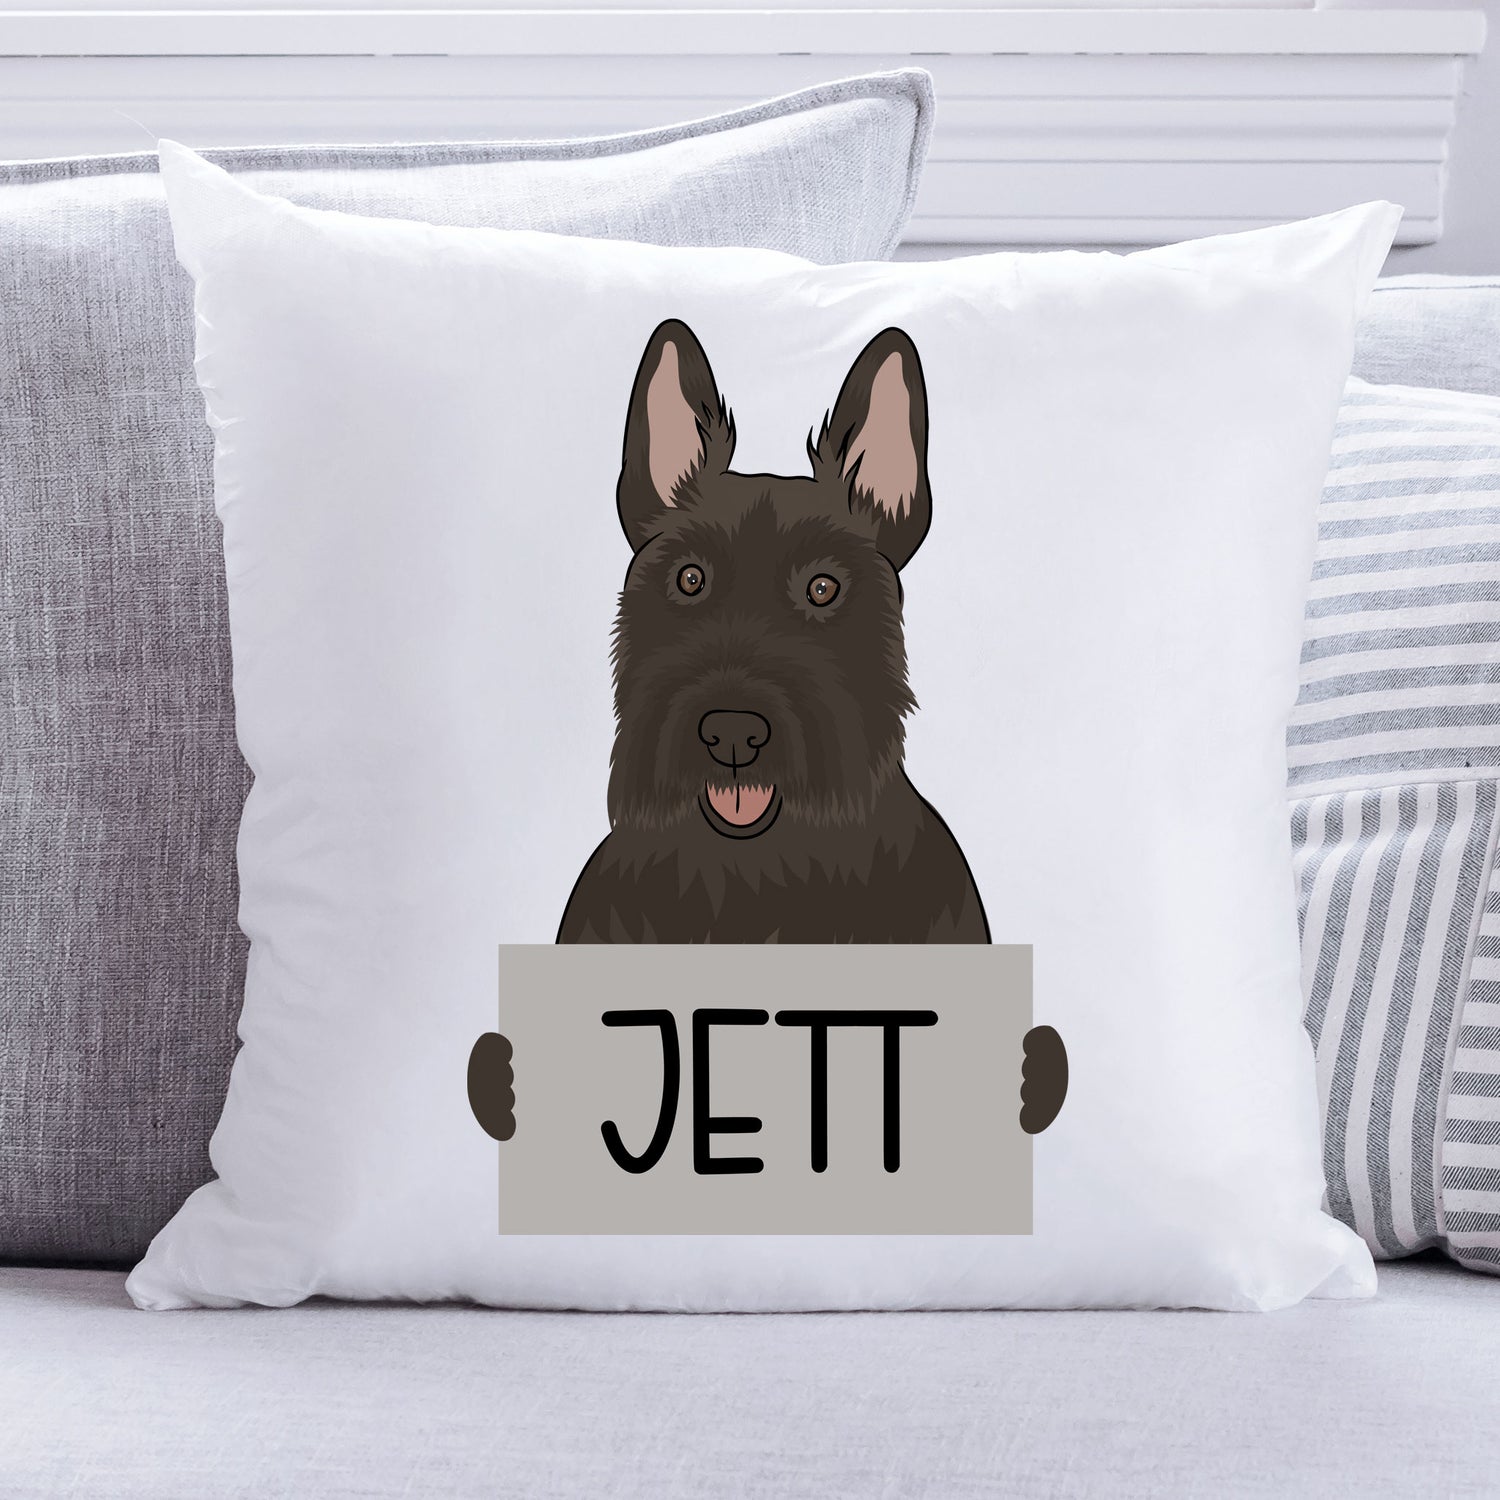 scottish-terrier-dog-cushion